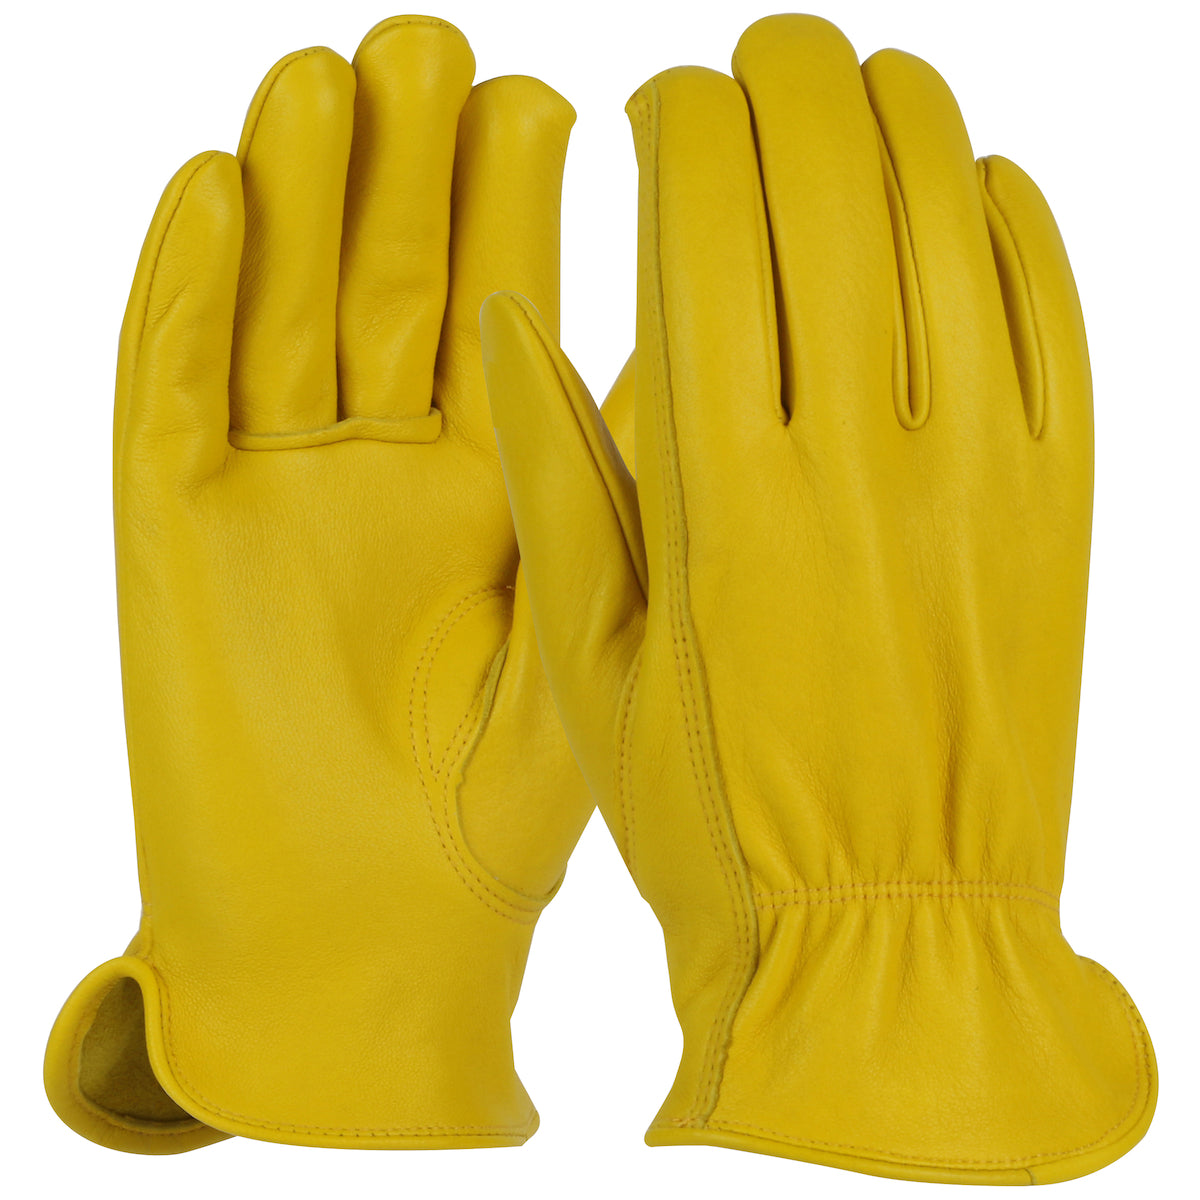 West Chester 9920K/S Premium Grade Top Grain Deerskin Leather Drivers Glove - Keystone Thumb